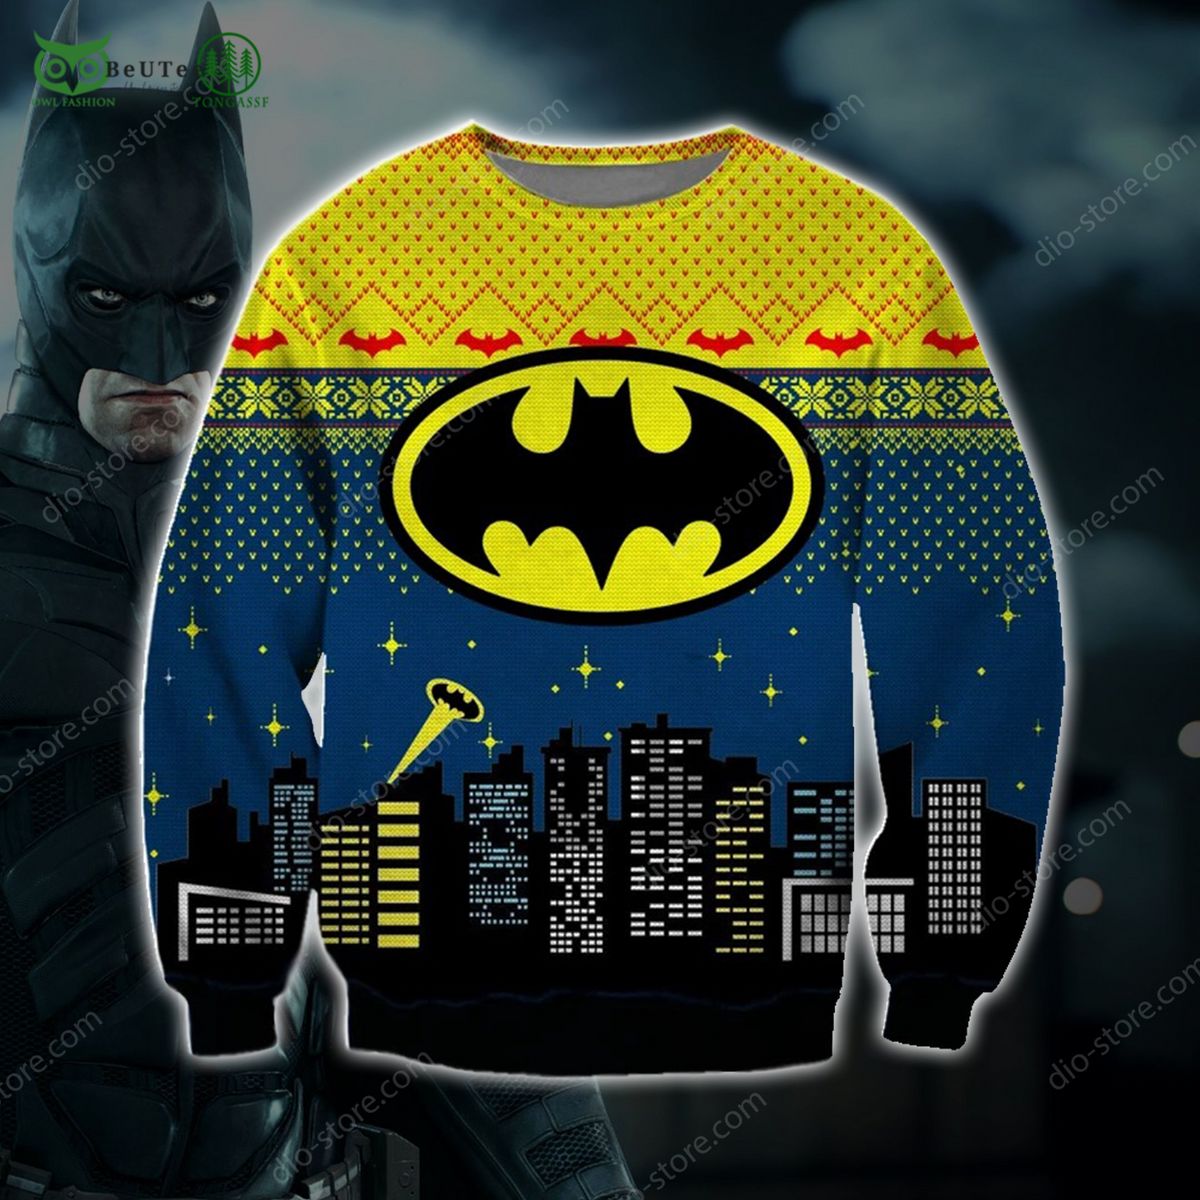 batman justice league christmas ugly sweater 1 ioKb3